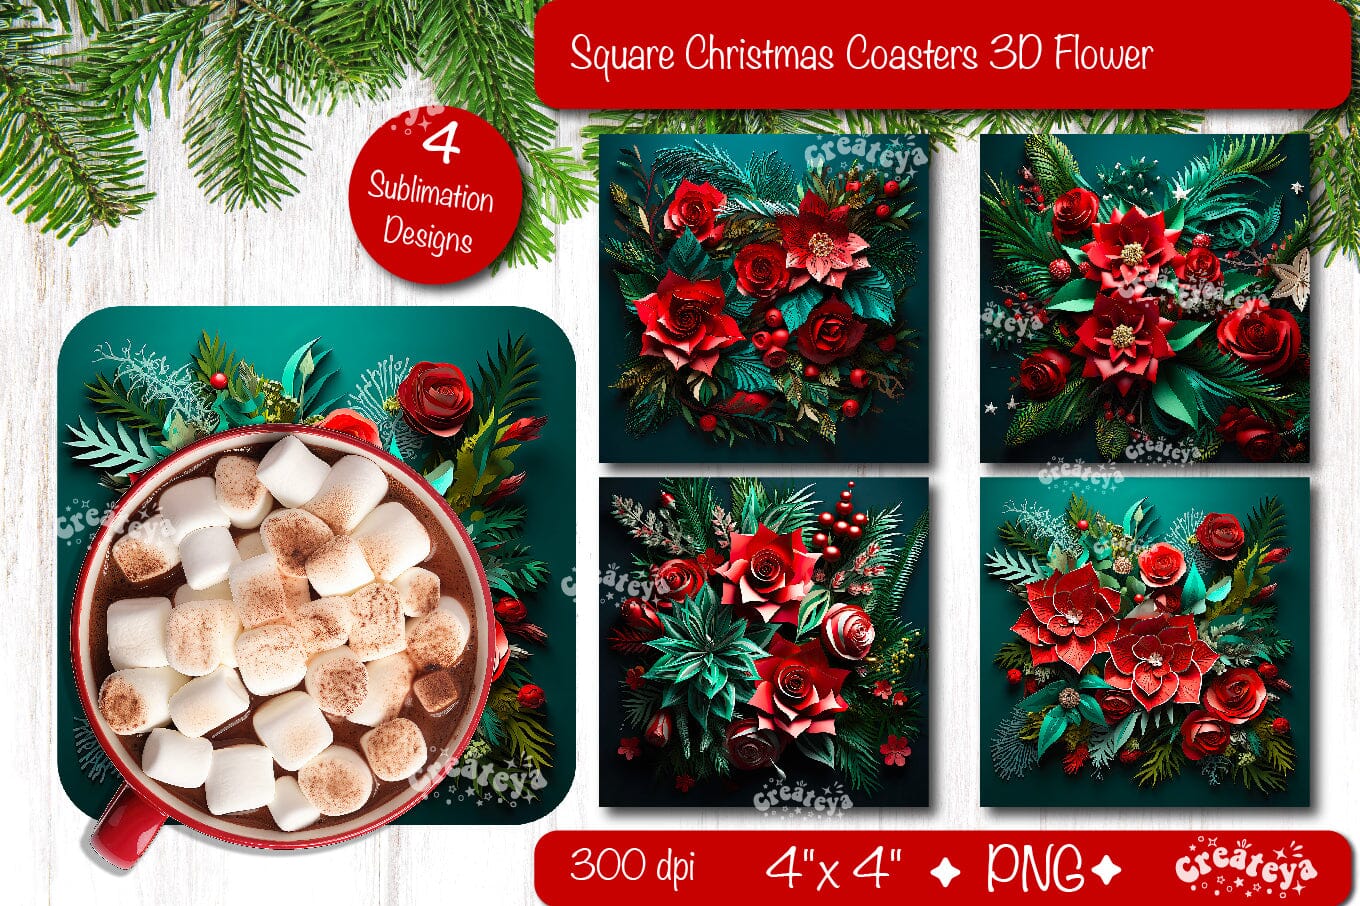 Christmas gift card holder template SVG Bundle, Christmas Gnome money By  Createya Design